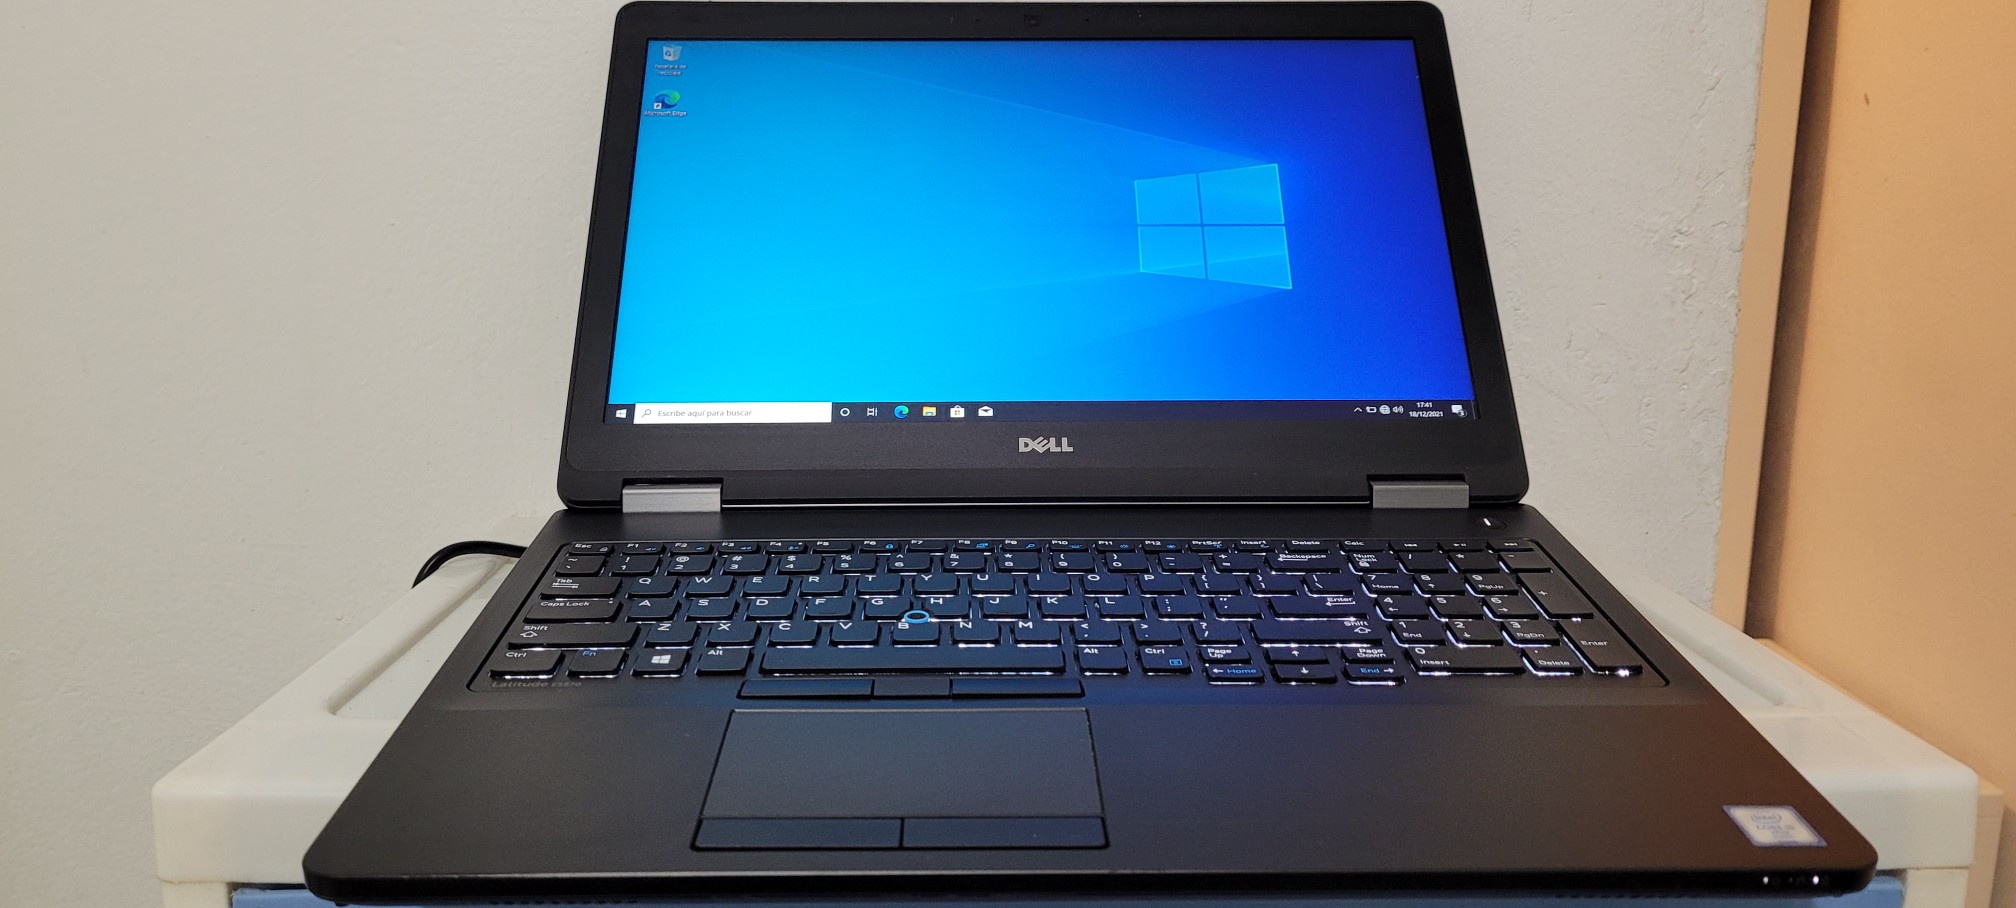 computadoras y laptops - Dell latirude 17 Pulg Core i7 Ram 8gb Disco 1000gb hdmi Full 0